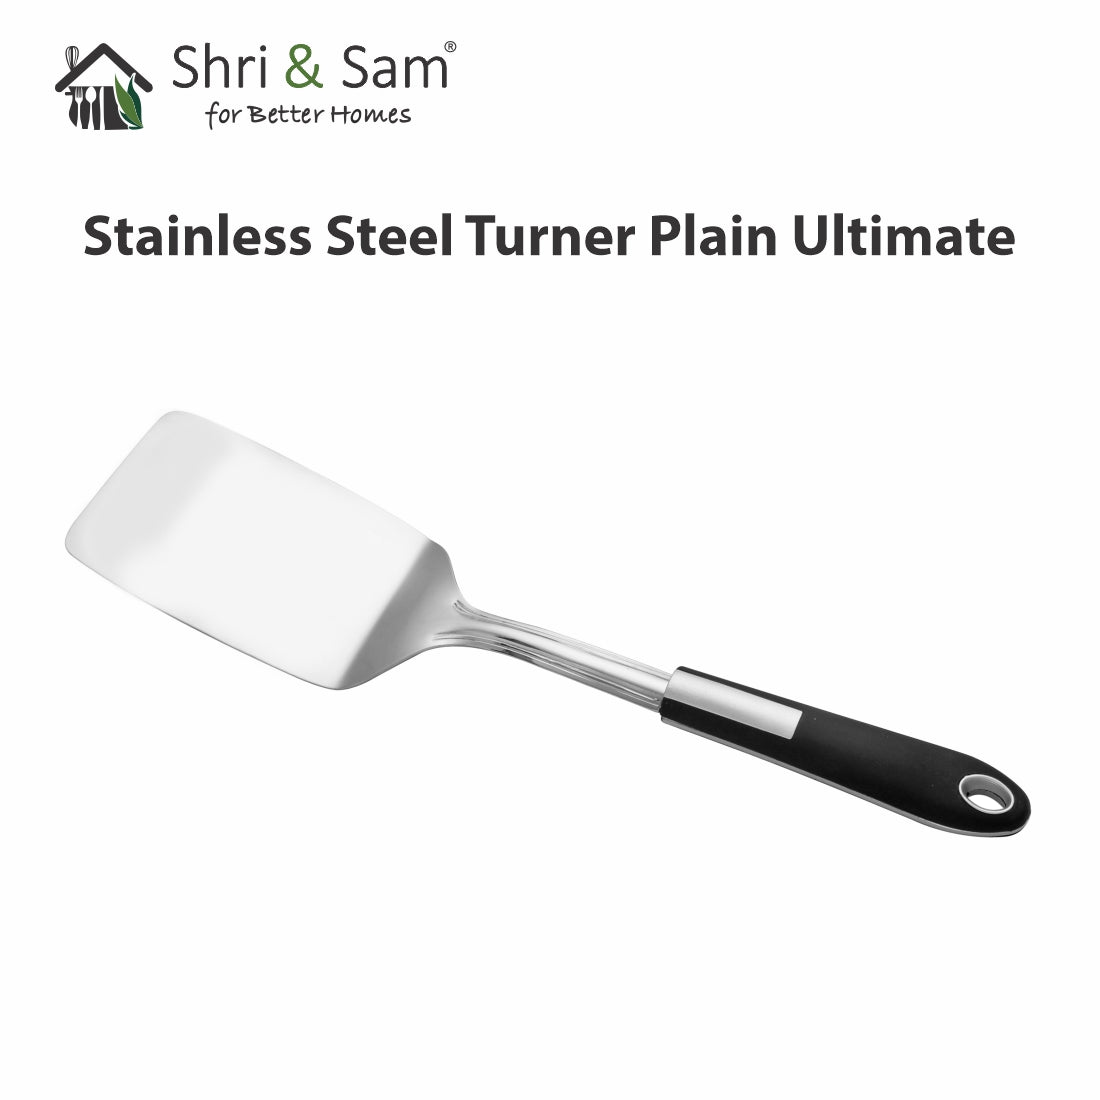 Stainless Steel Turner Plain Ultimate